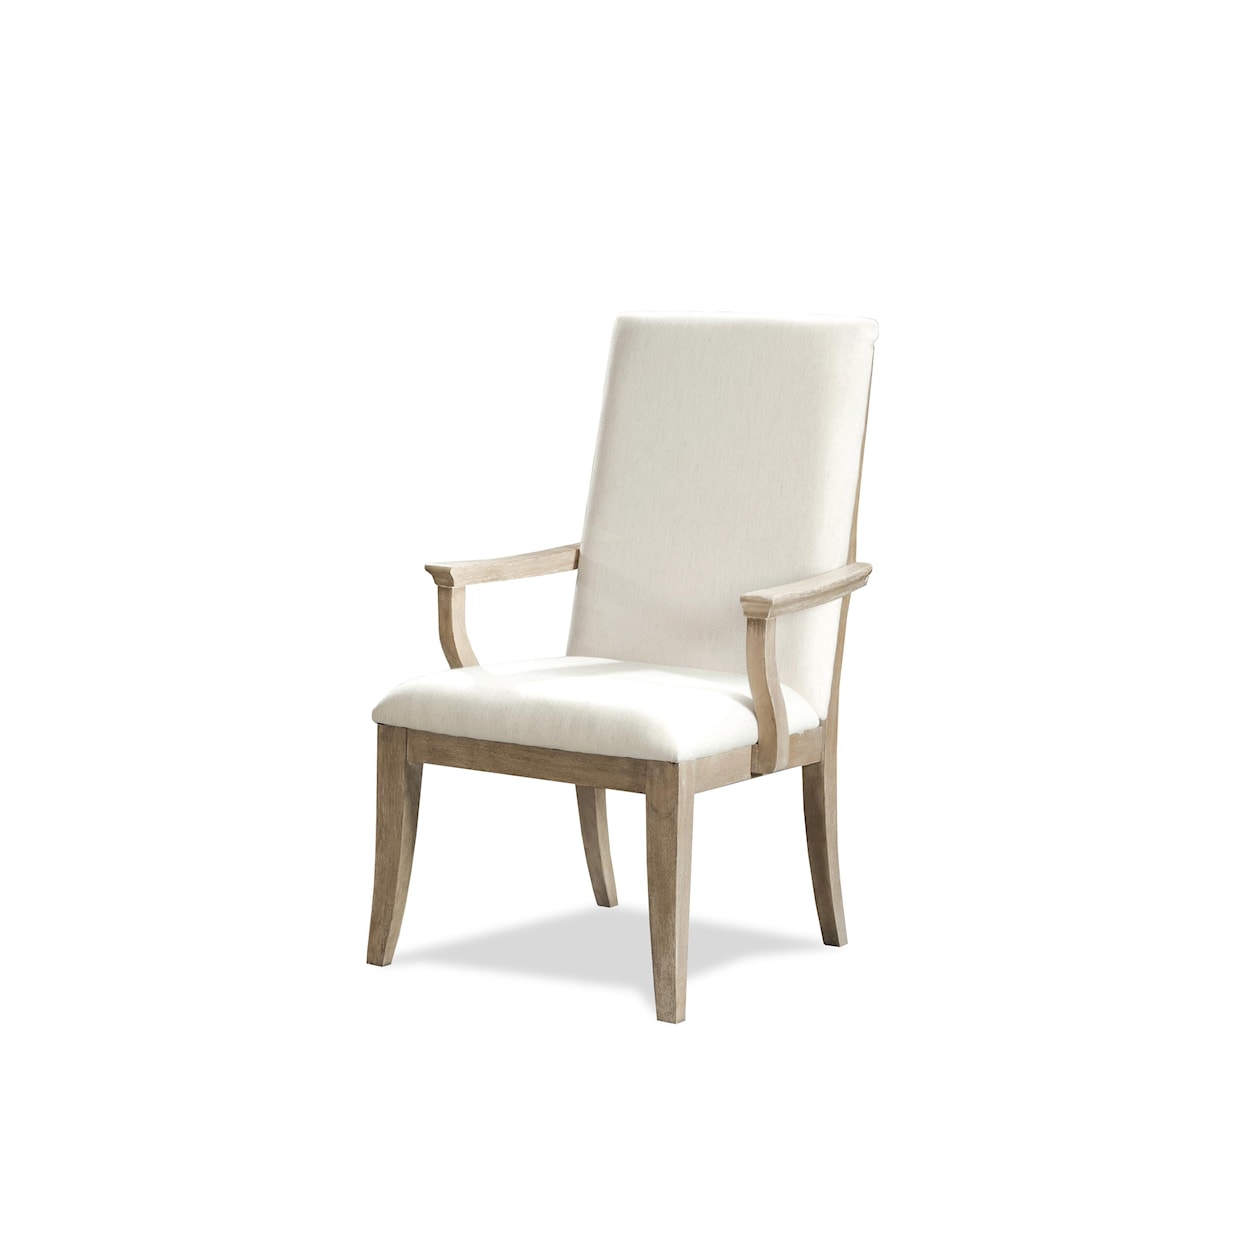 Riverside Furniture Sophie Upholstered Arm Chair